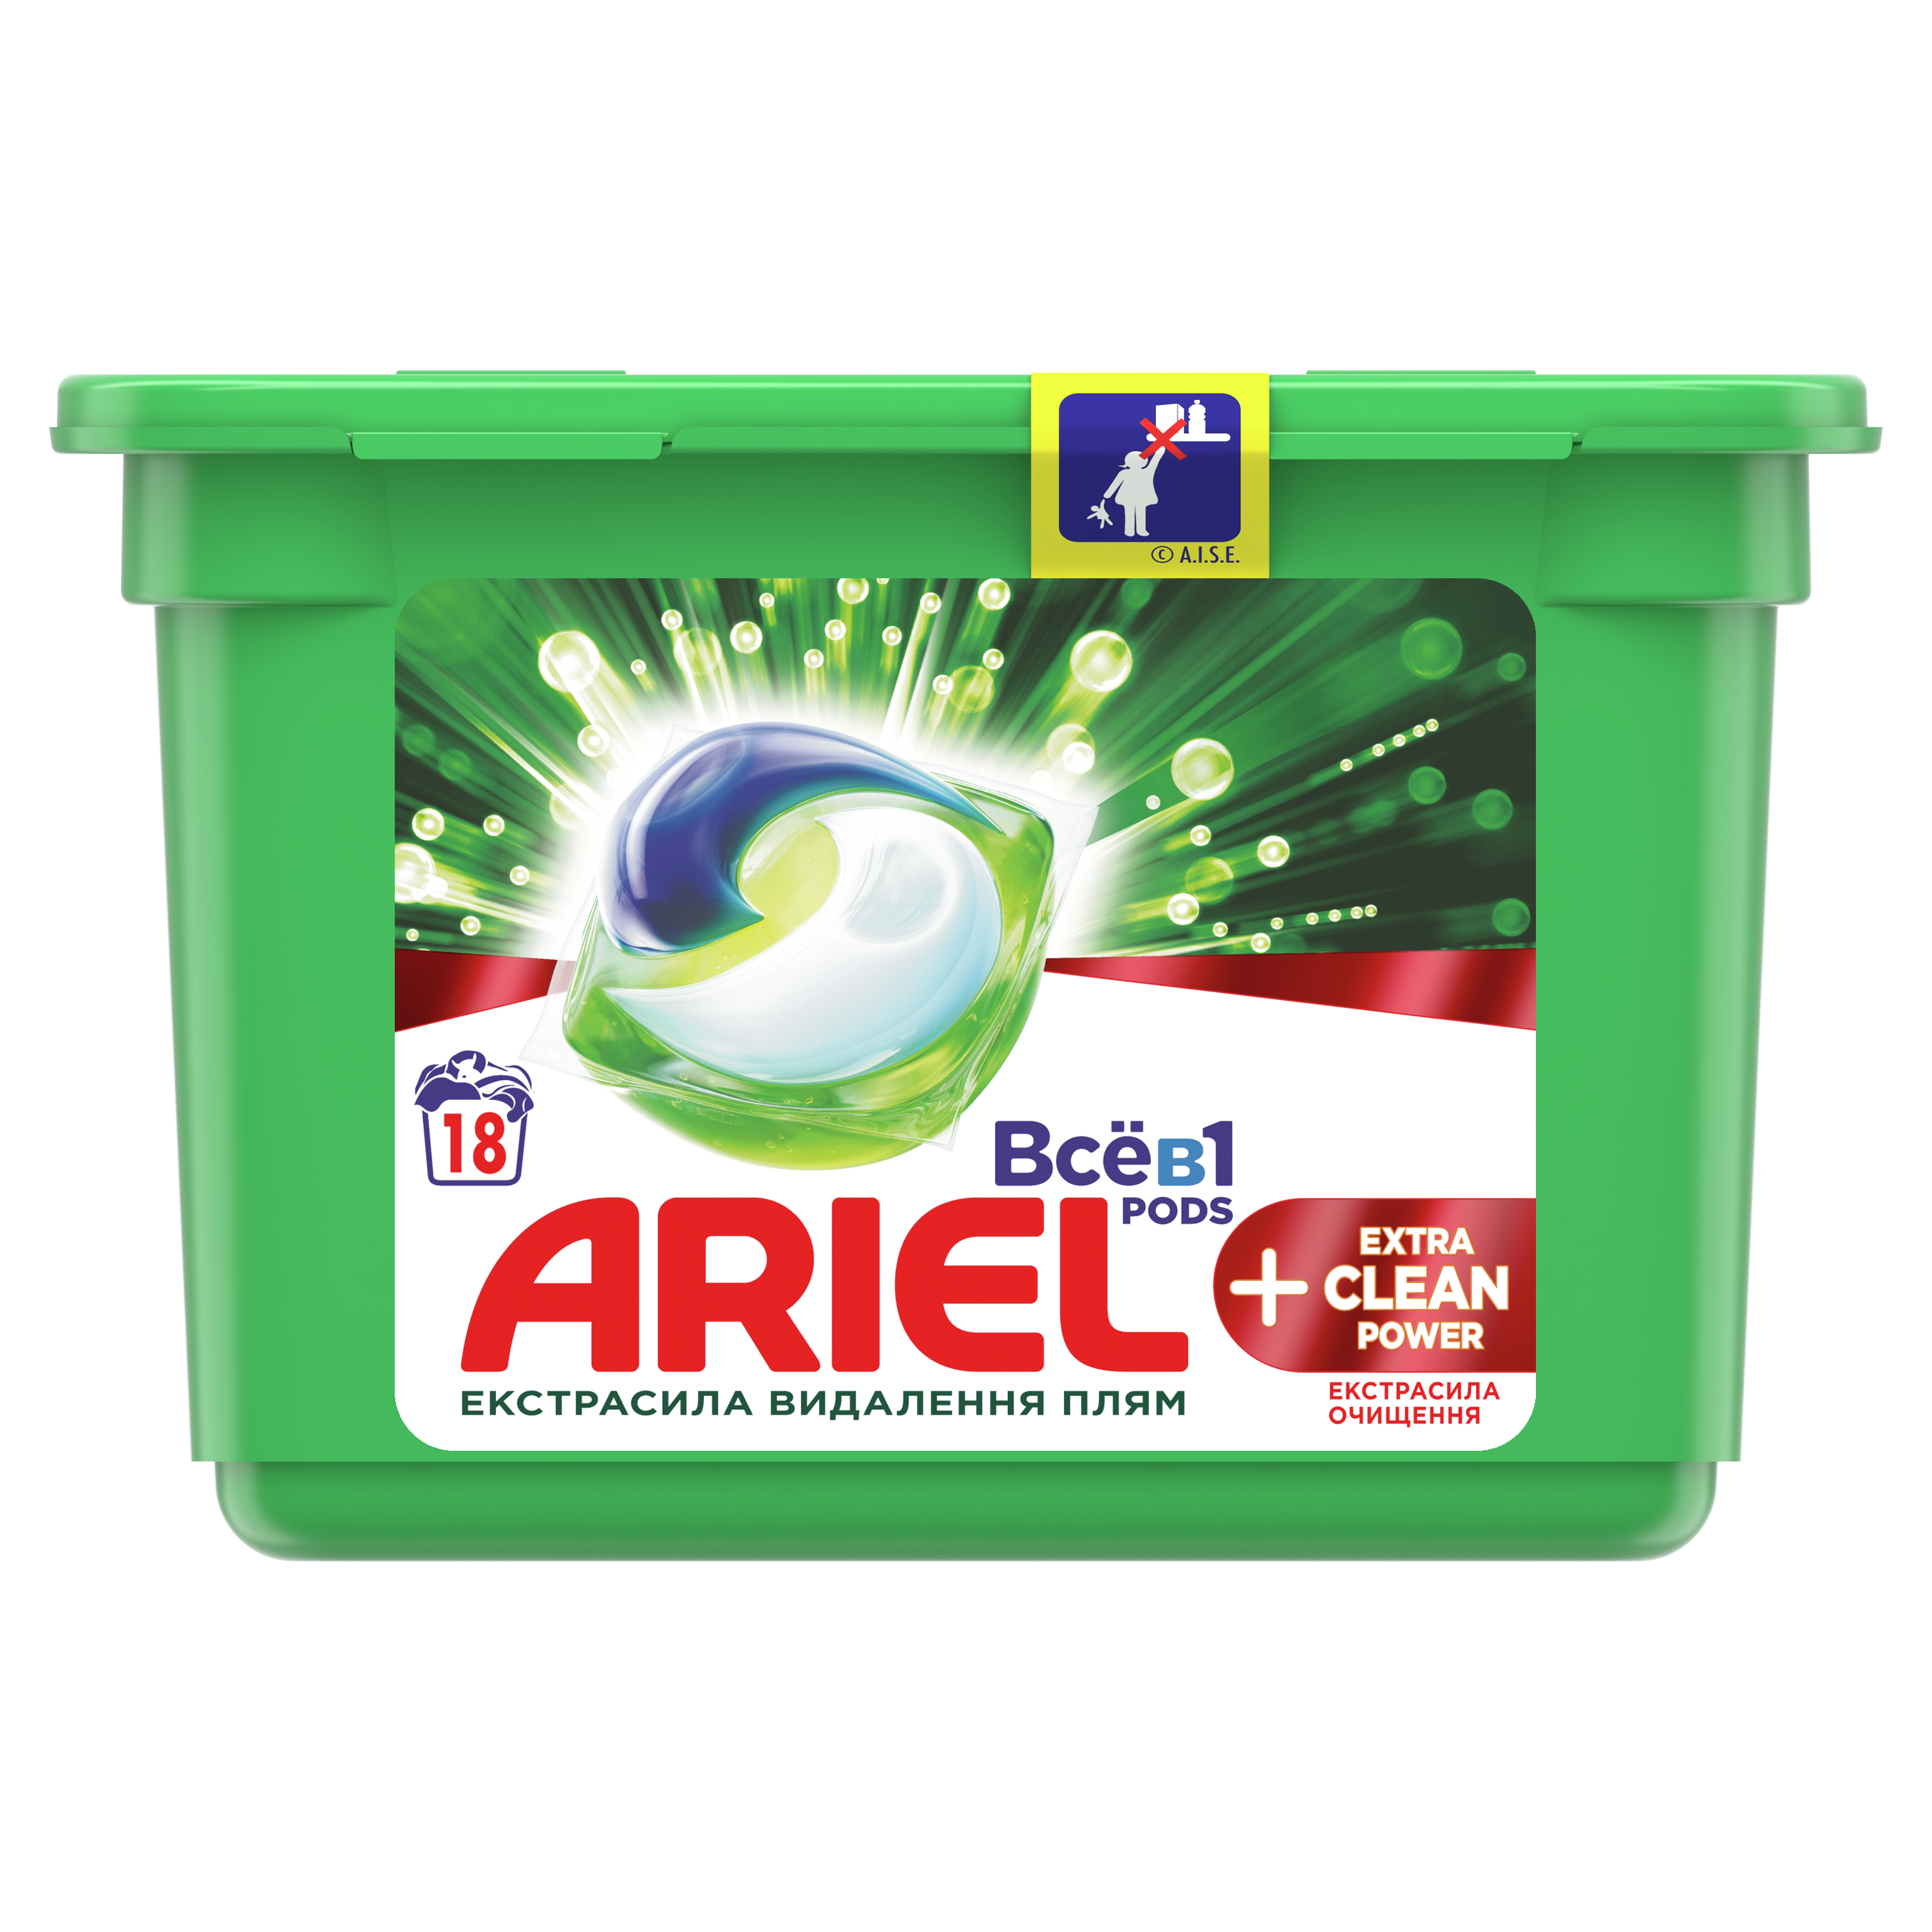 Капсули для прання Ariel Pods Все-в-1 + Екстра OXI Effect, 18 шт (81763739) - фото 1